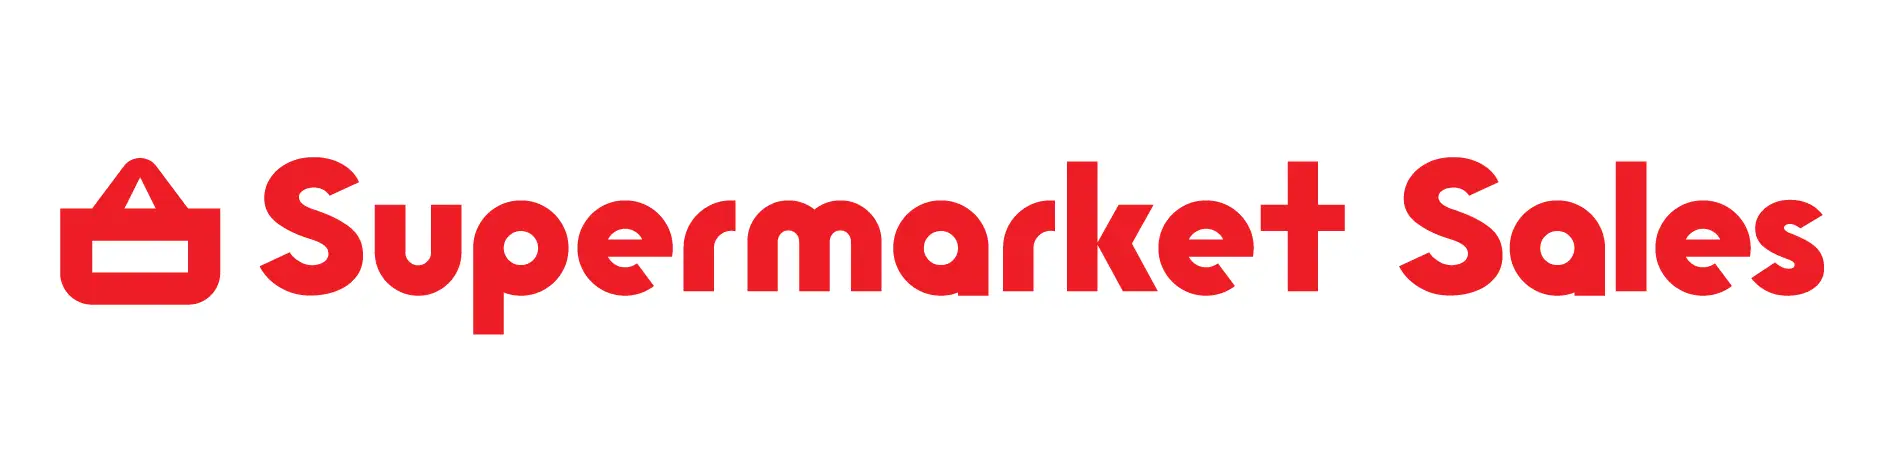 Supermarket_Logo-01